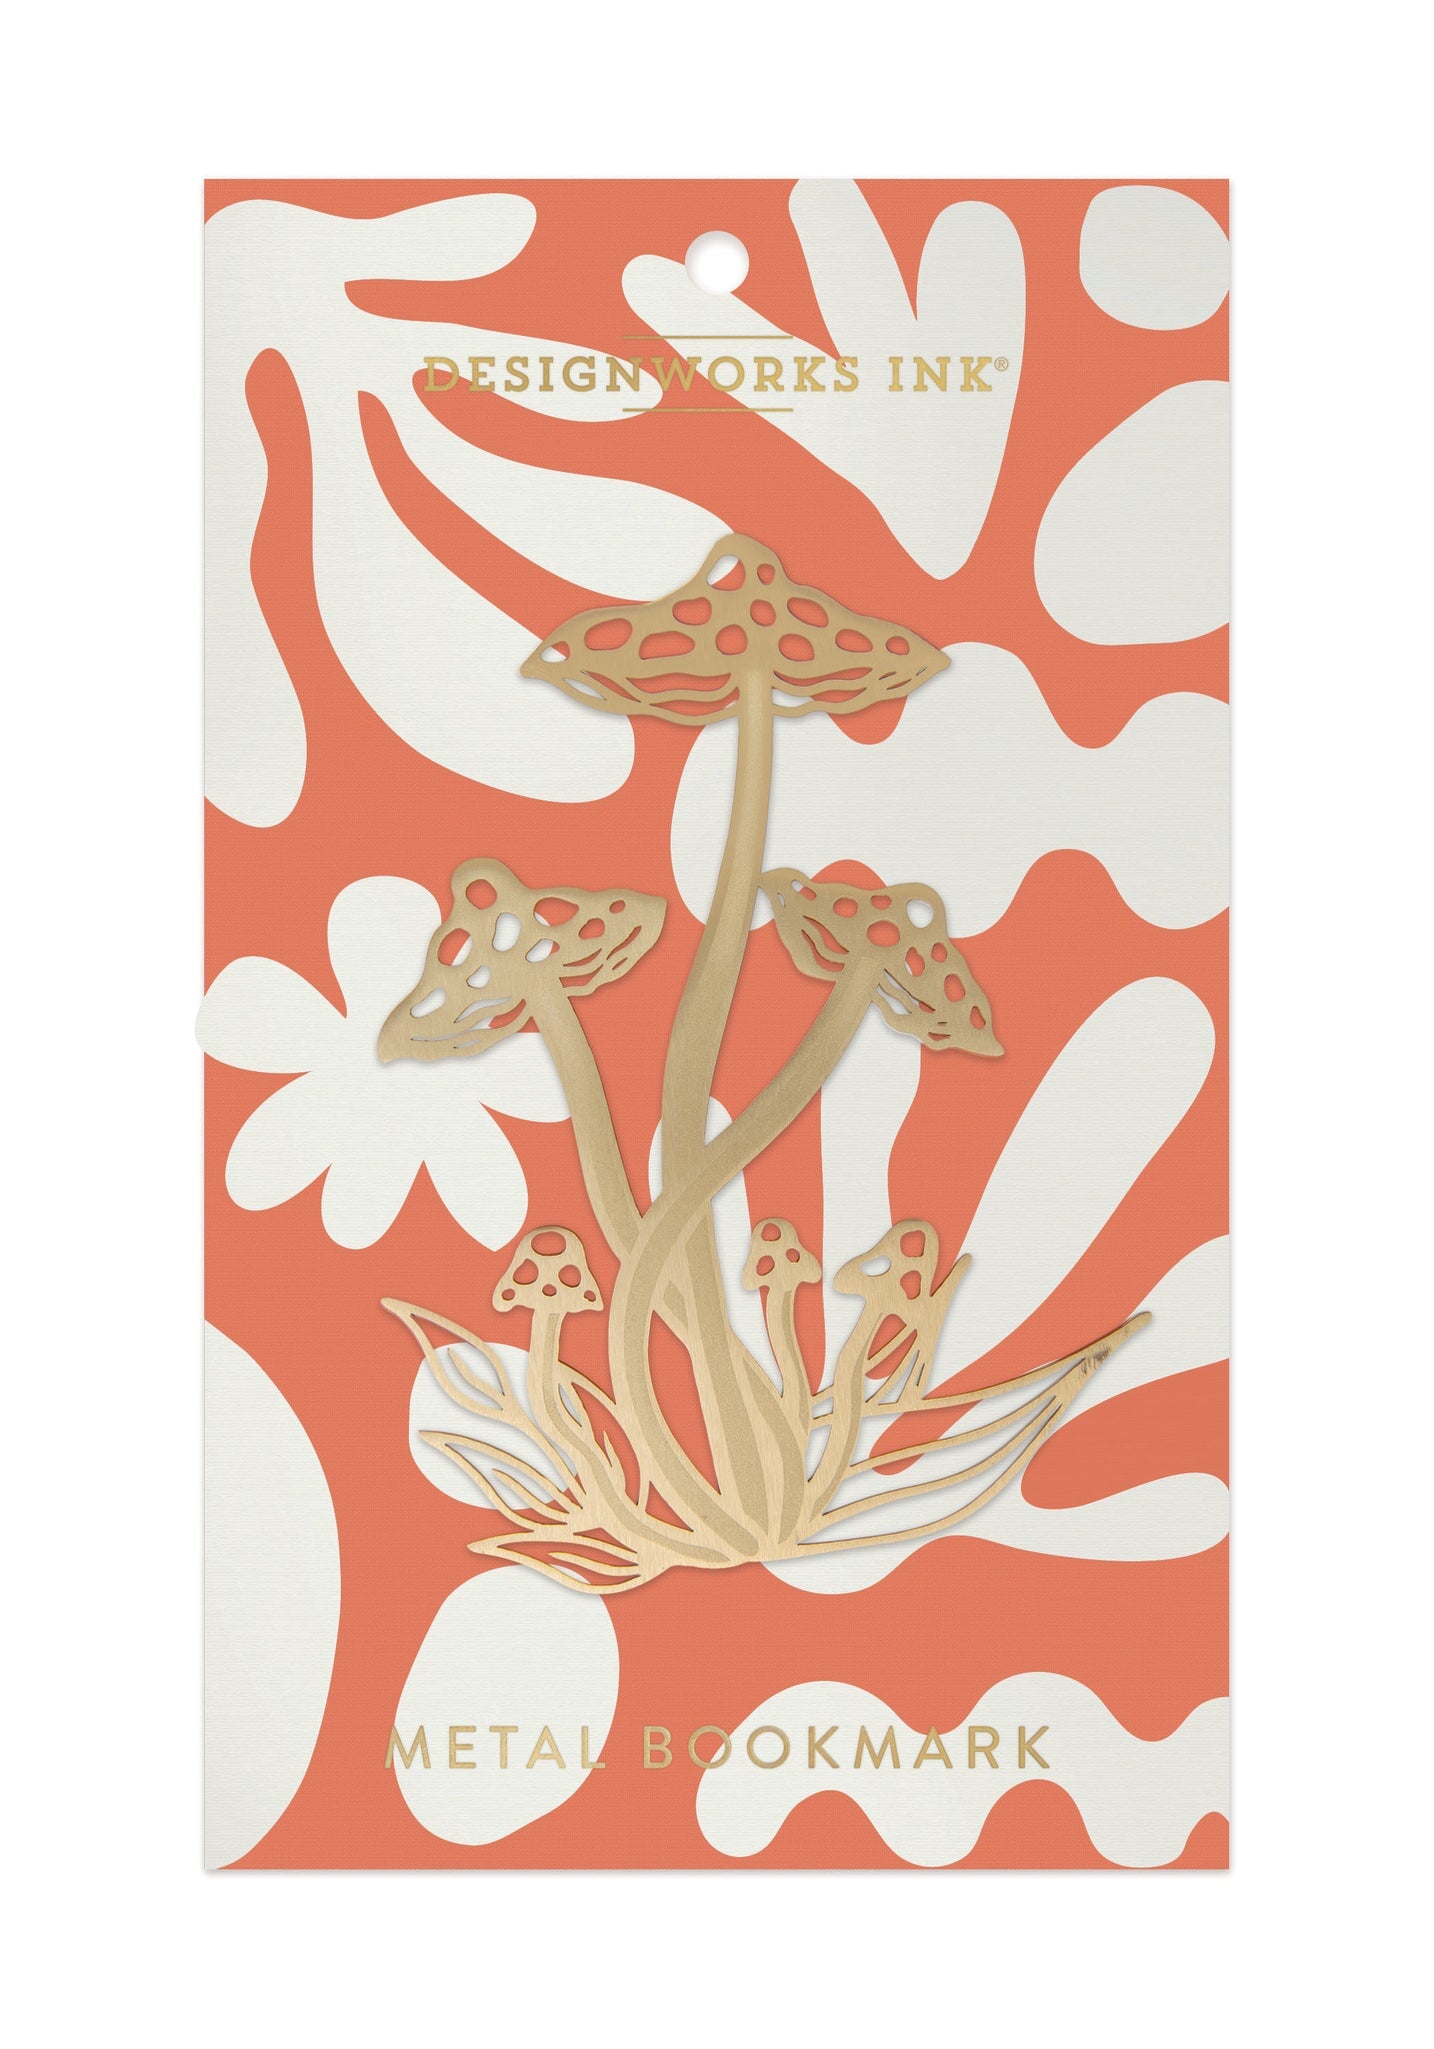 Mushroom Bookmark  Bookmarks handmade, Creative bookmarks, Diy bookmarks